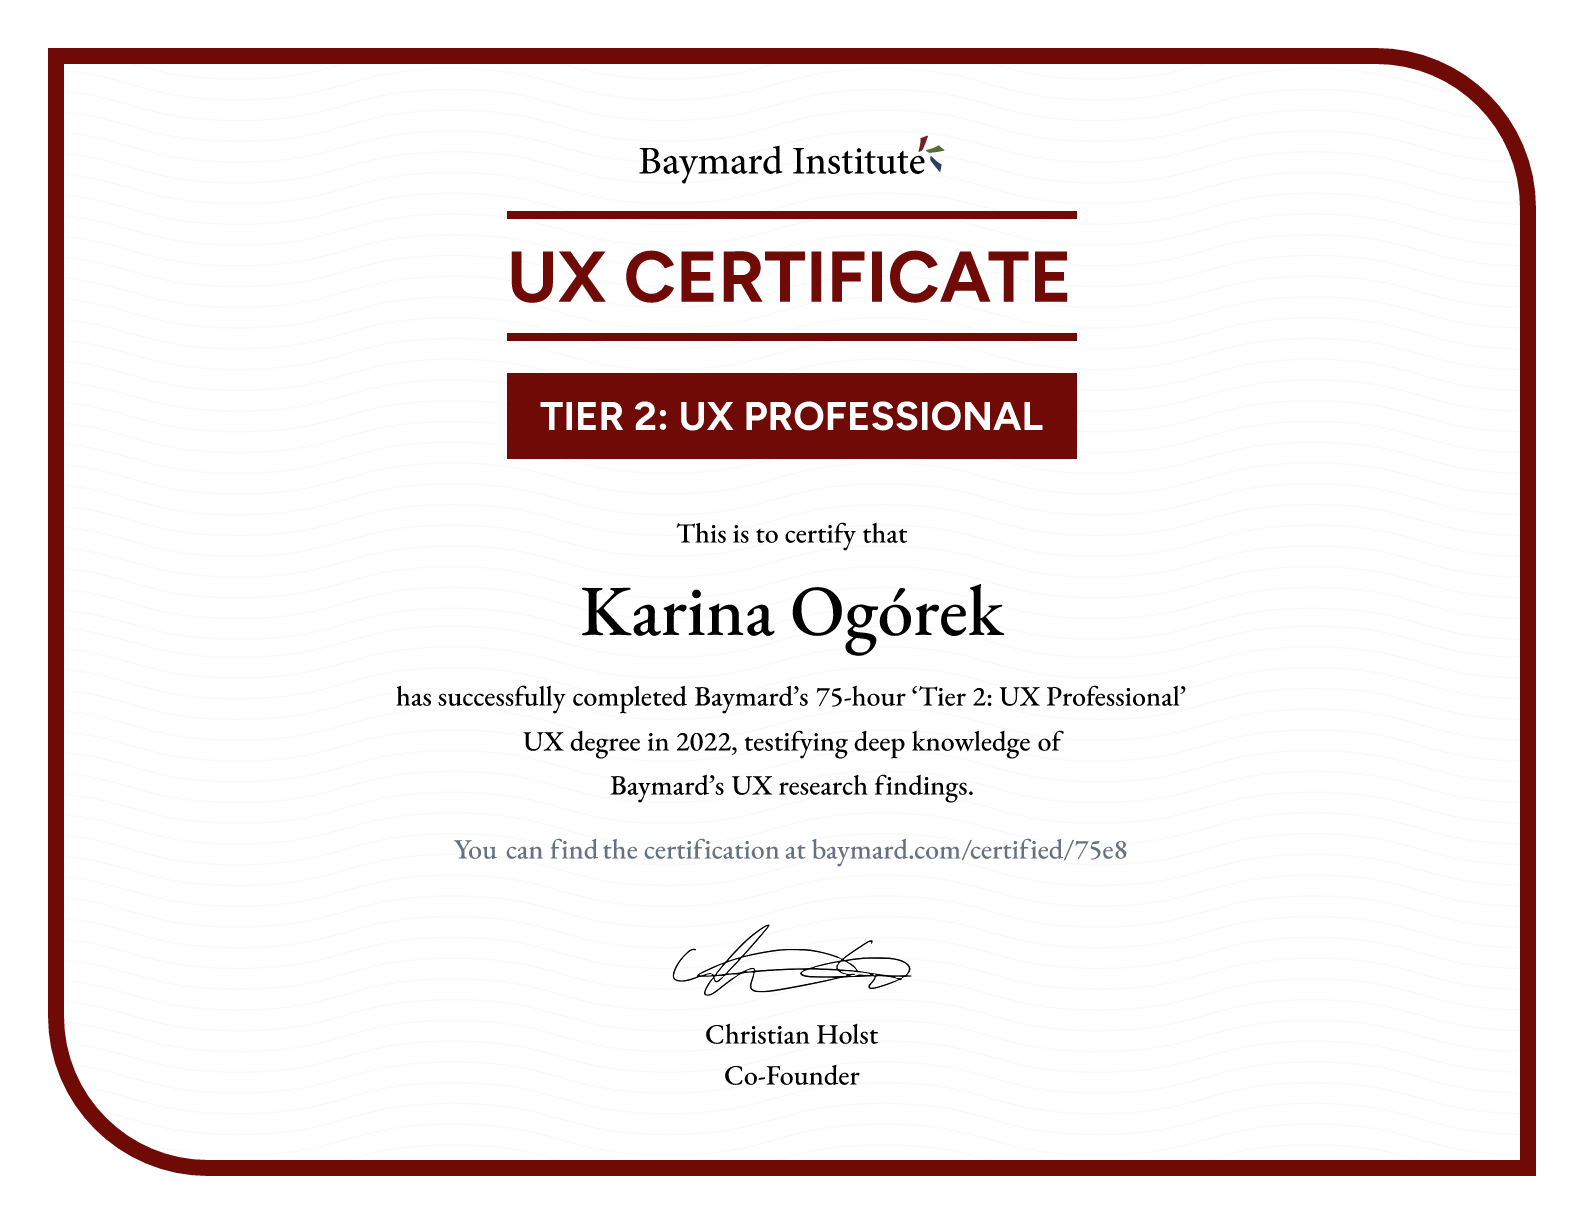 Karina Ogórek’s certificate